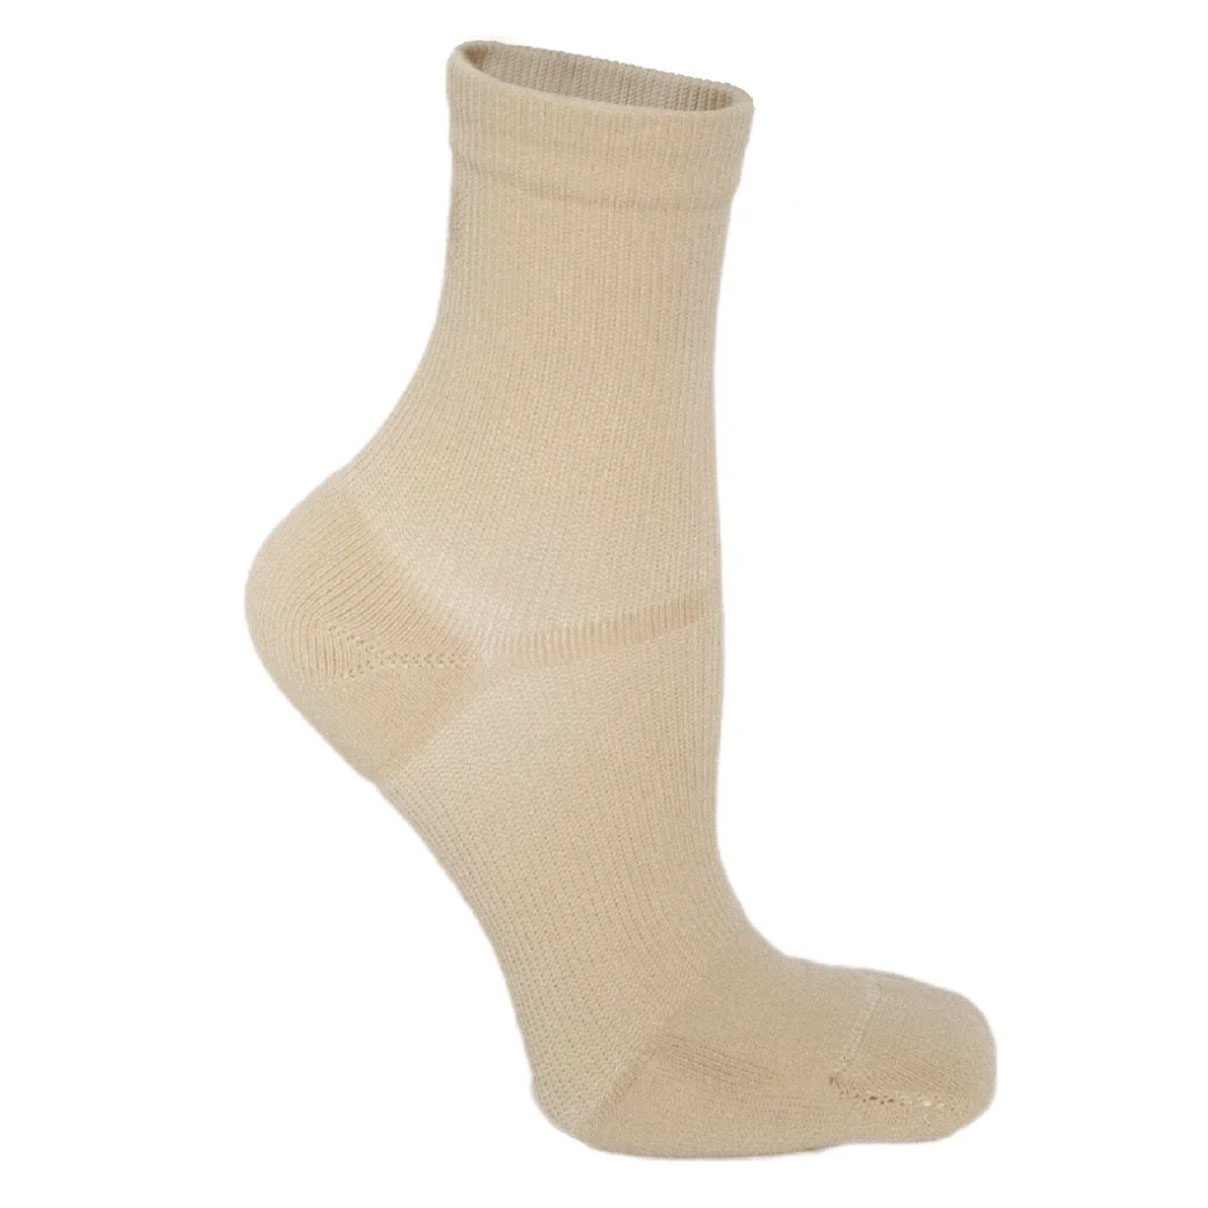 Beige compression sock